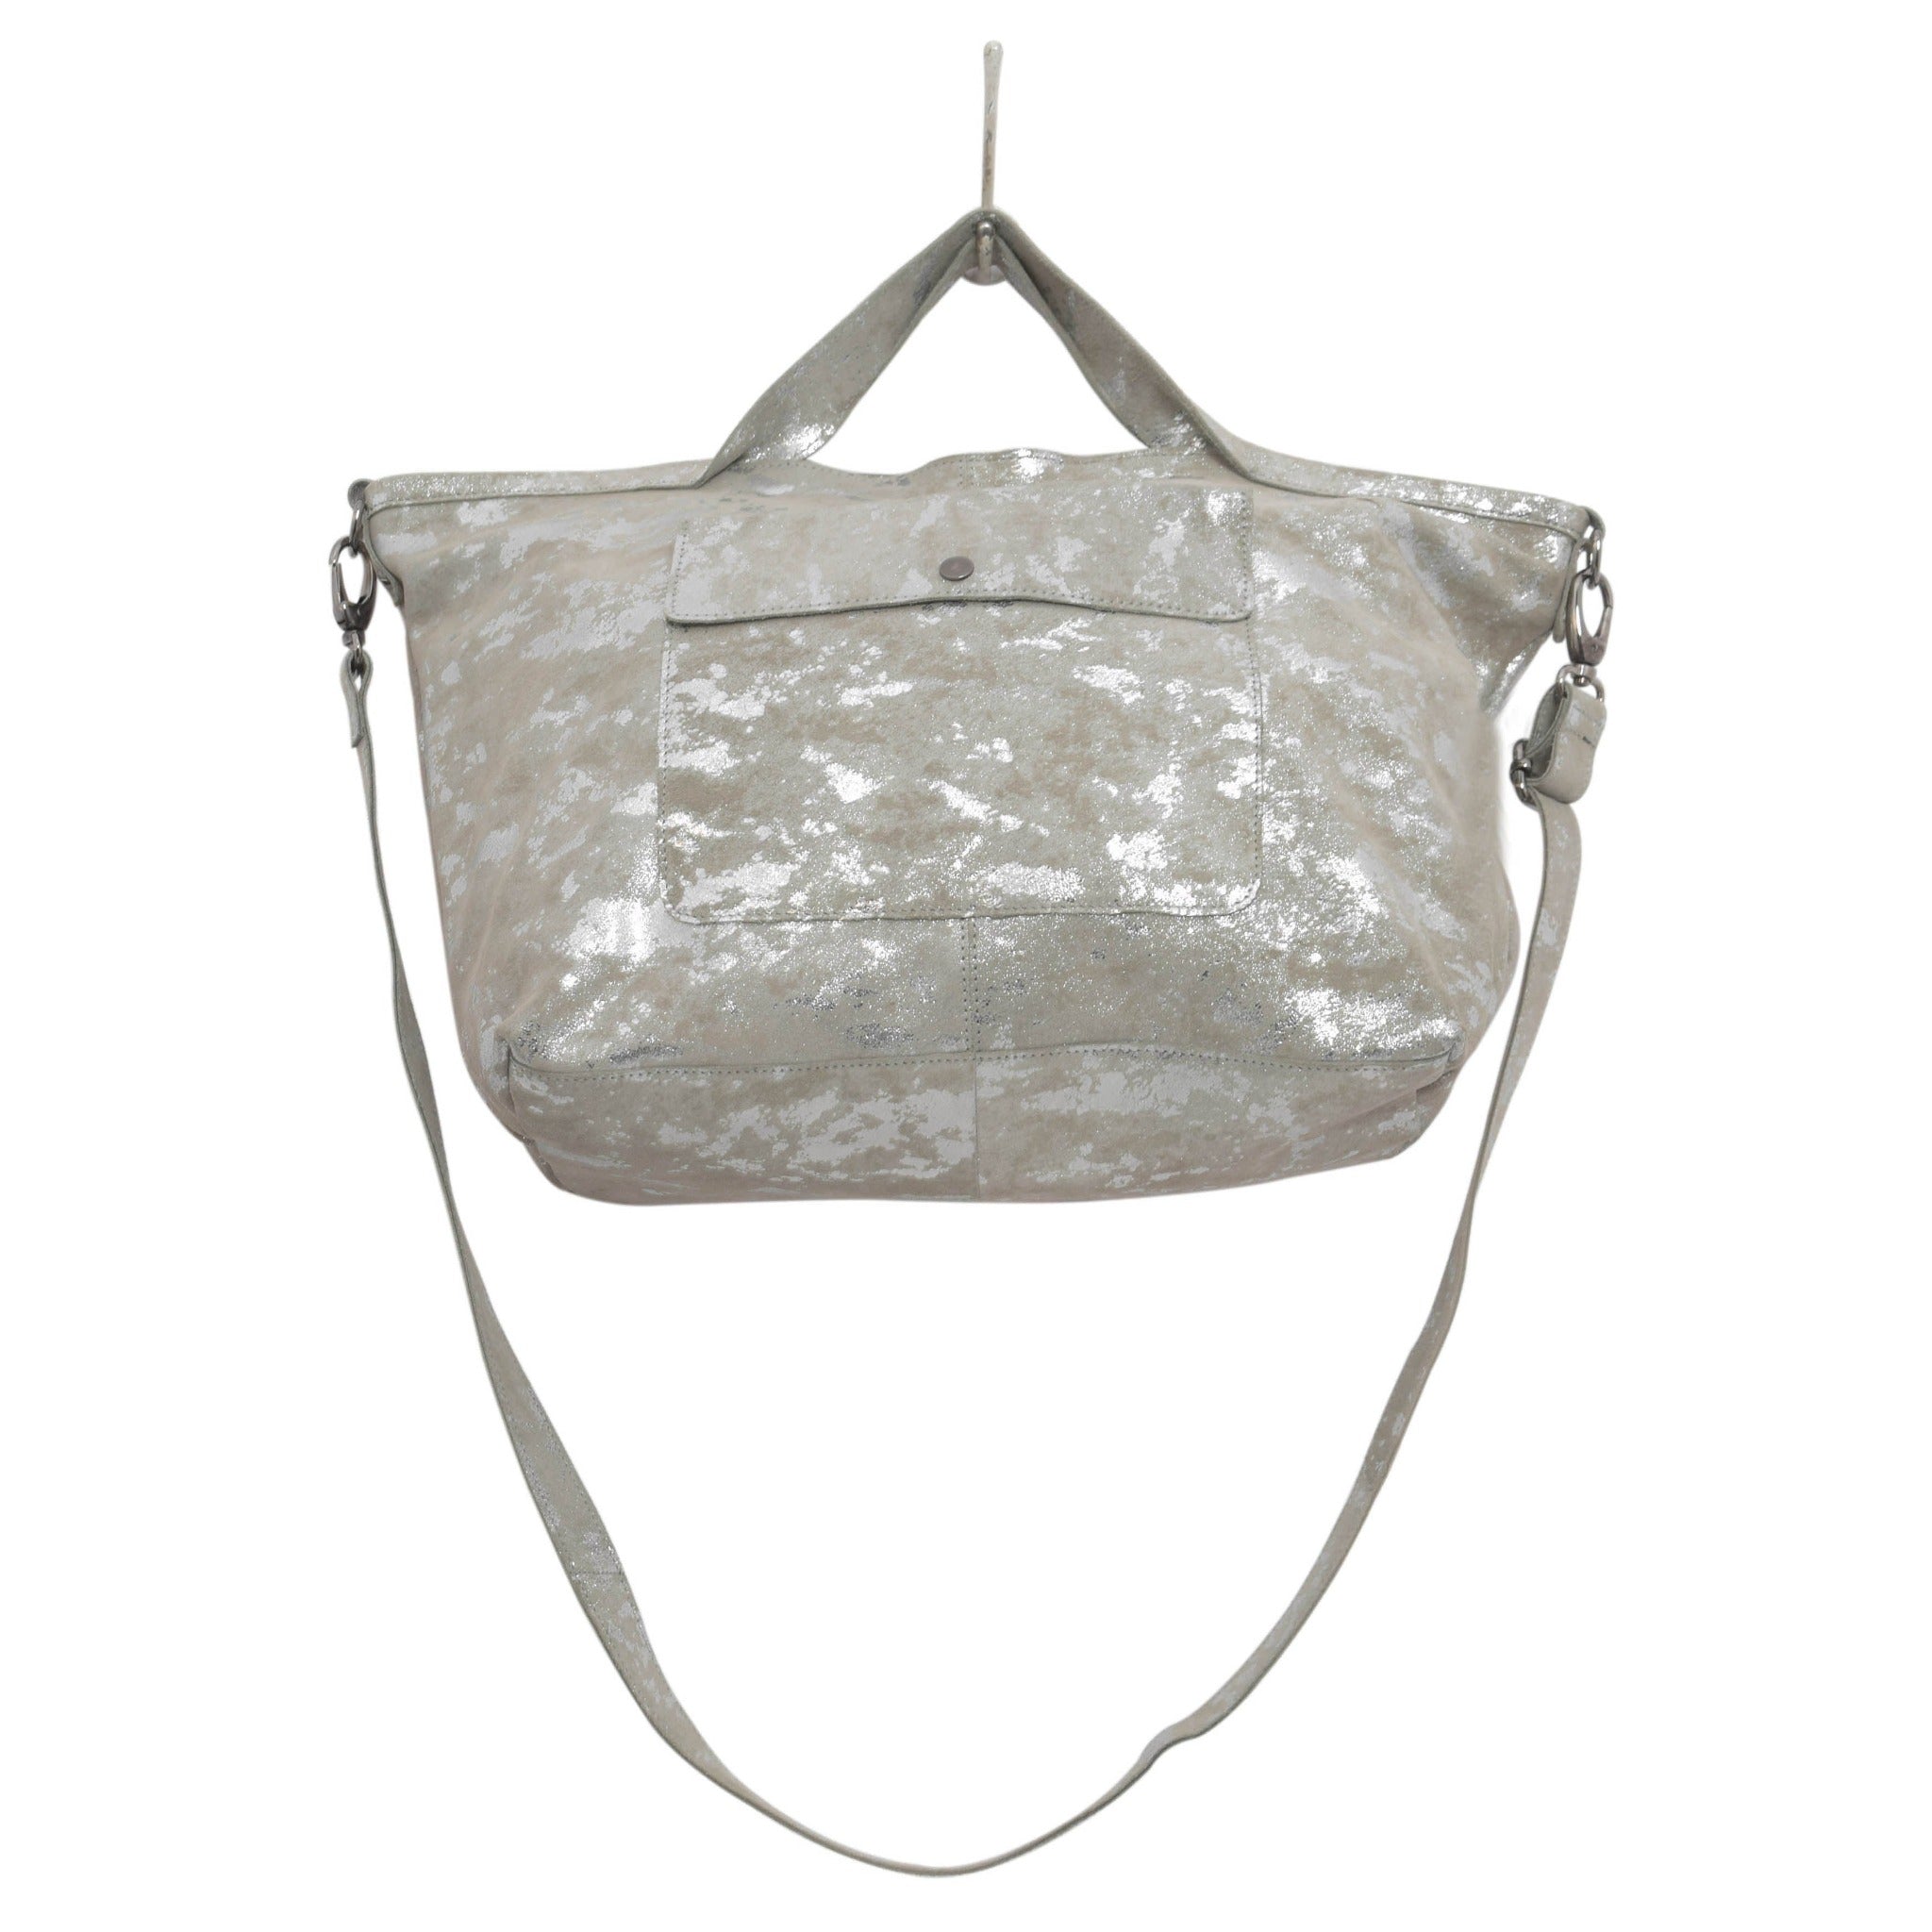 Goyard Sac Hardy Tote in grey, Luxury, Bags & Wallets on Carousell